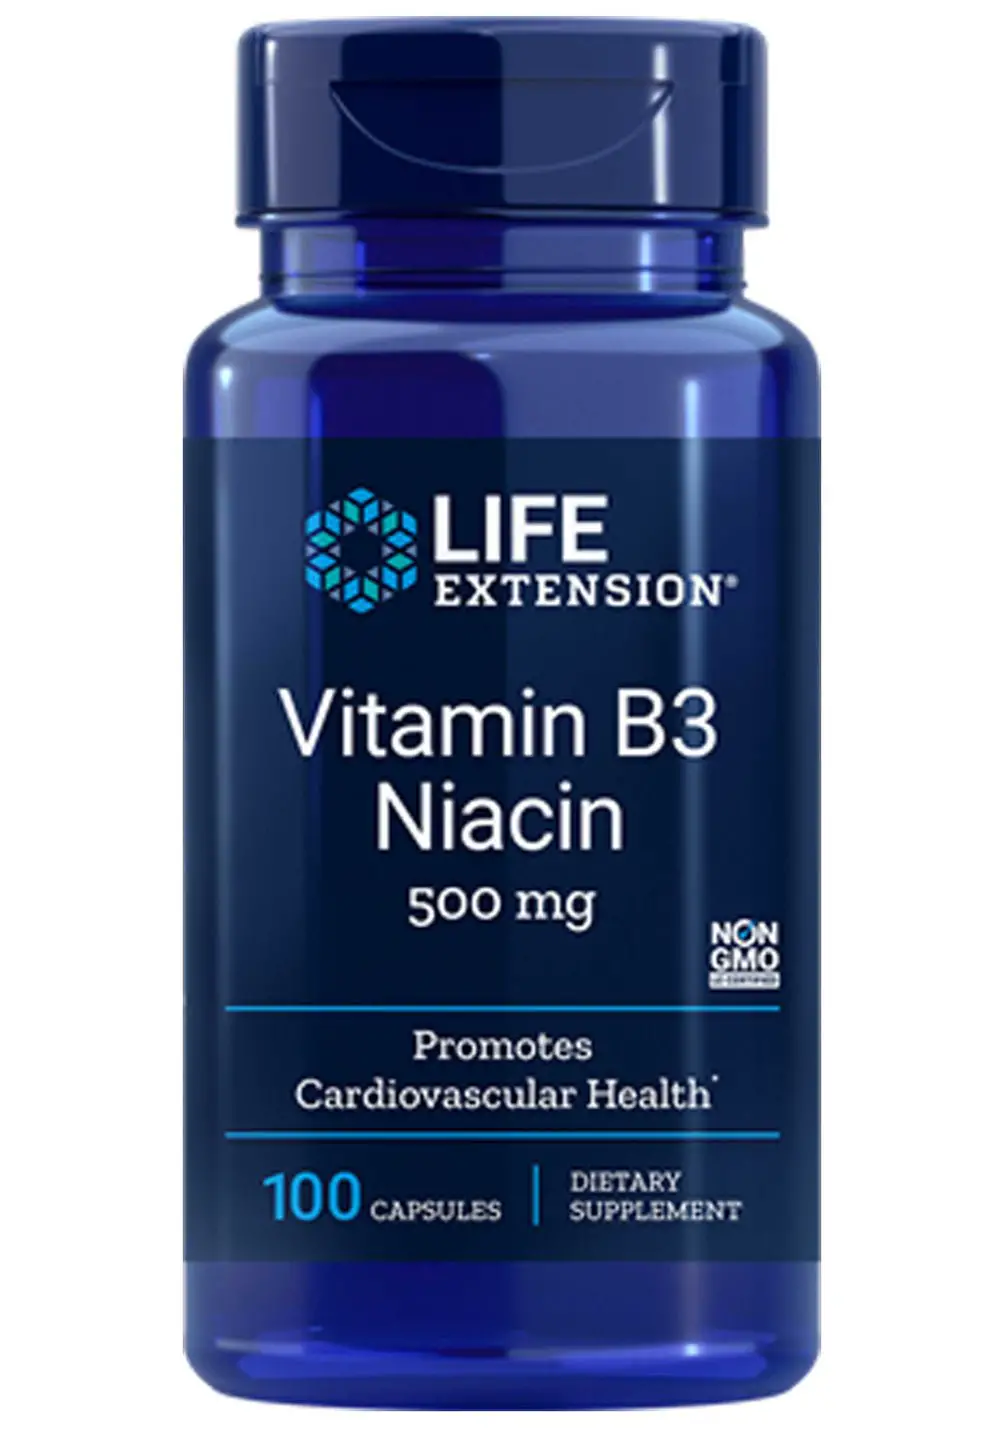 Life Extension Vitamin B3 Niacin â Supplement First